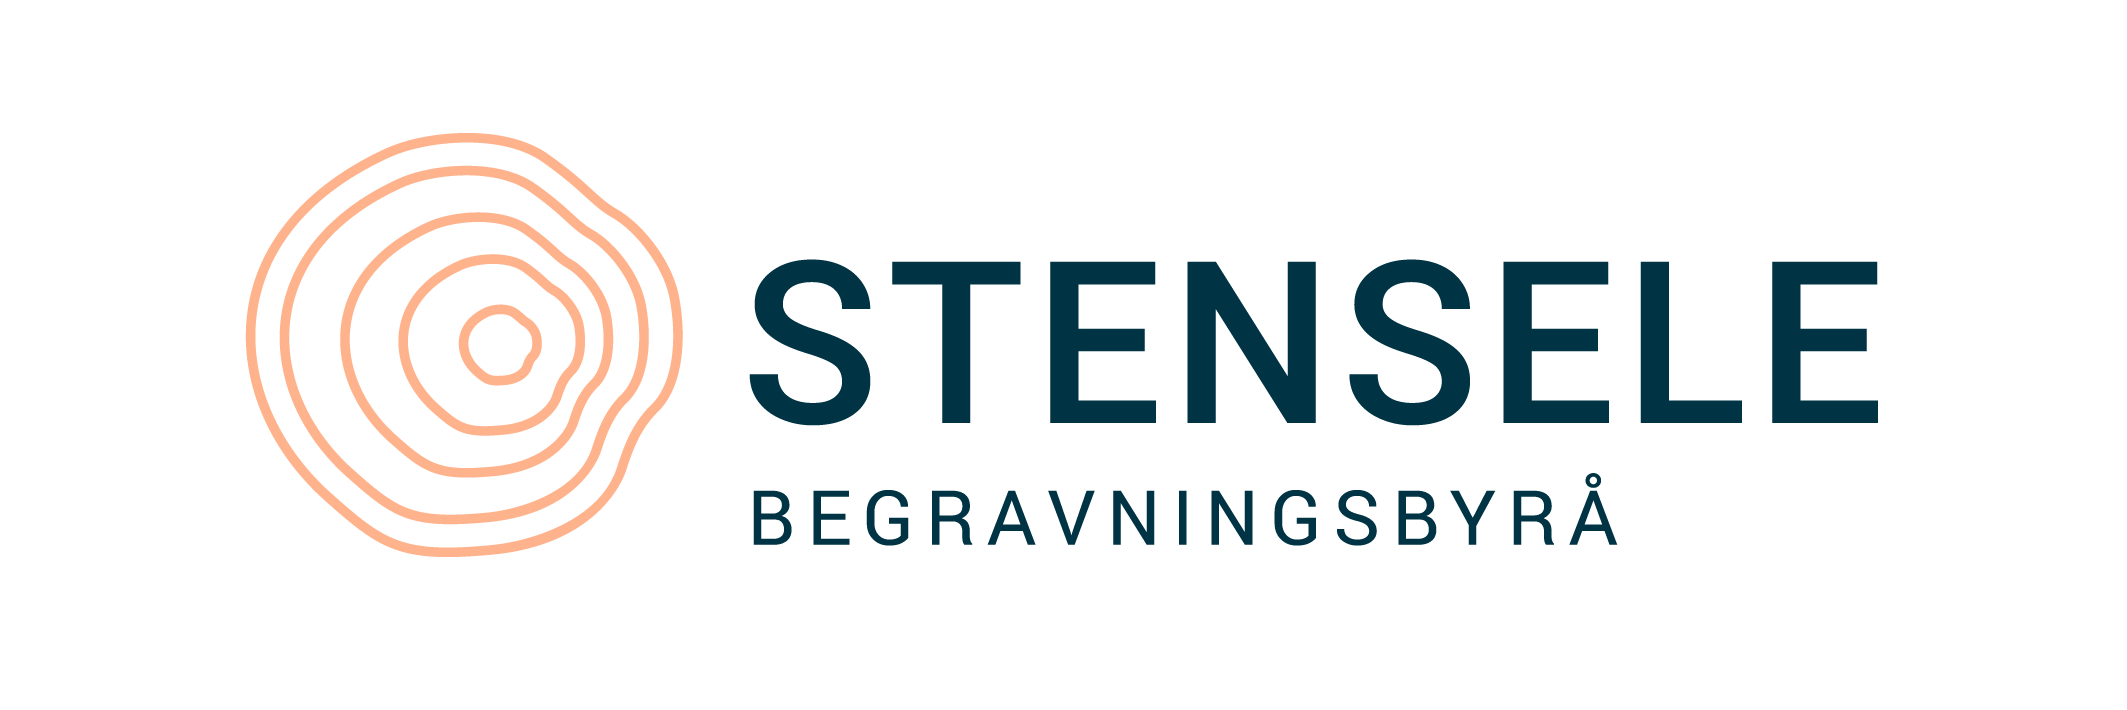 Stensele Begravningsbyrå logotyp